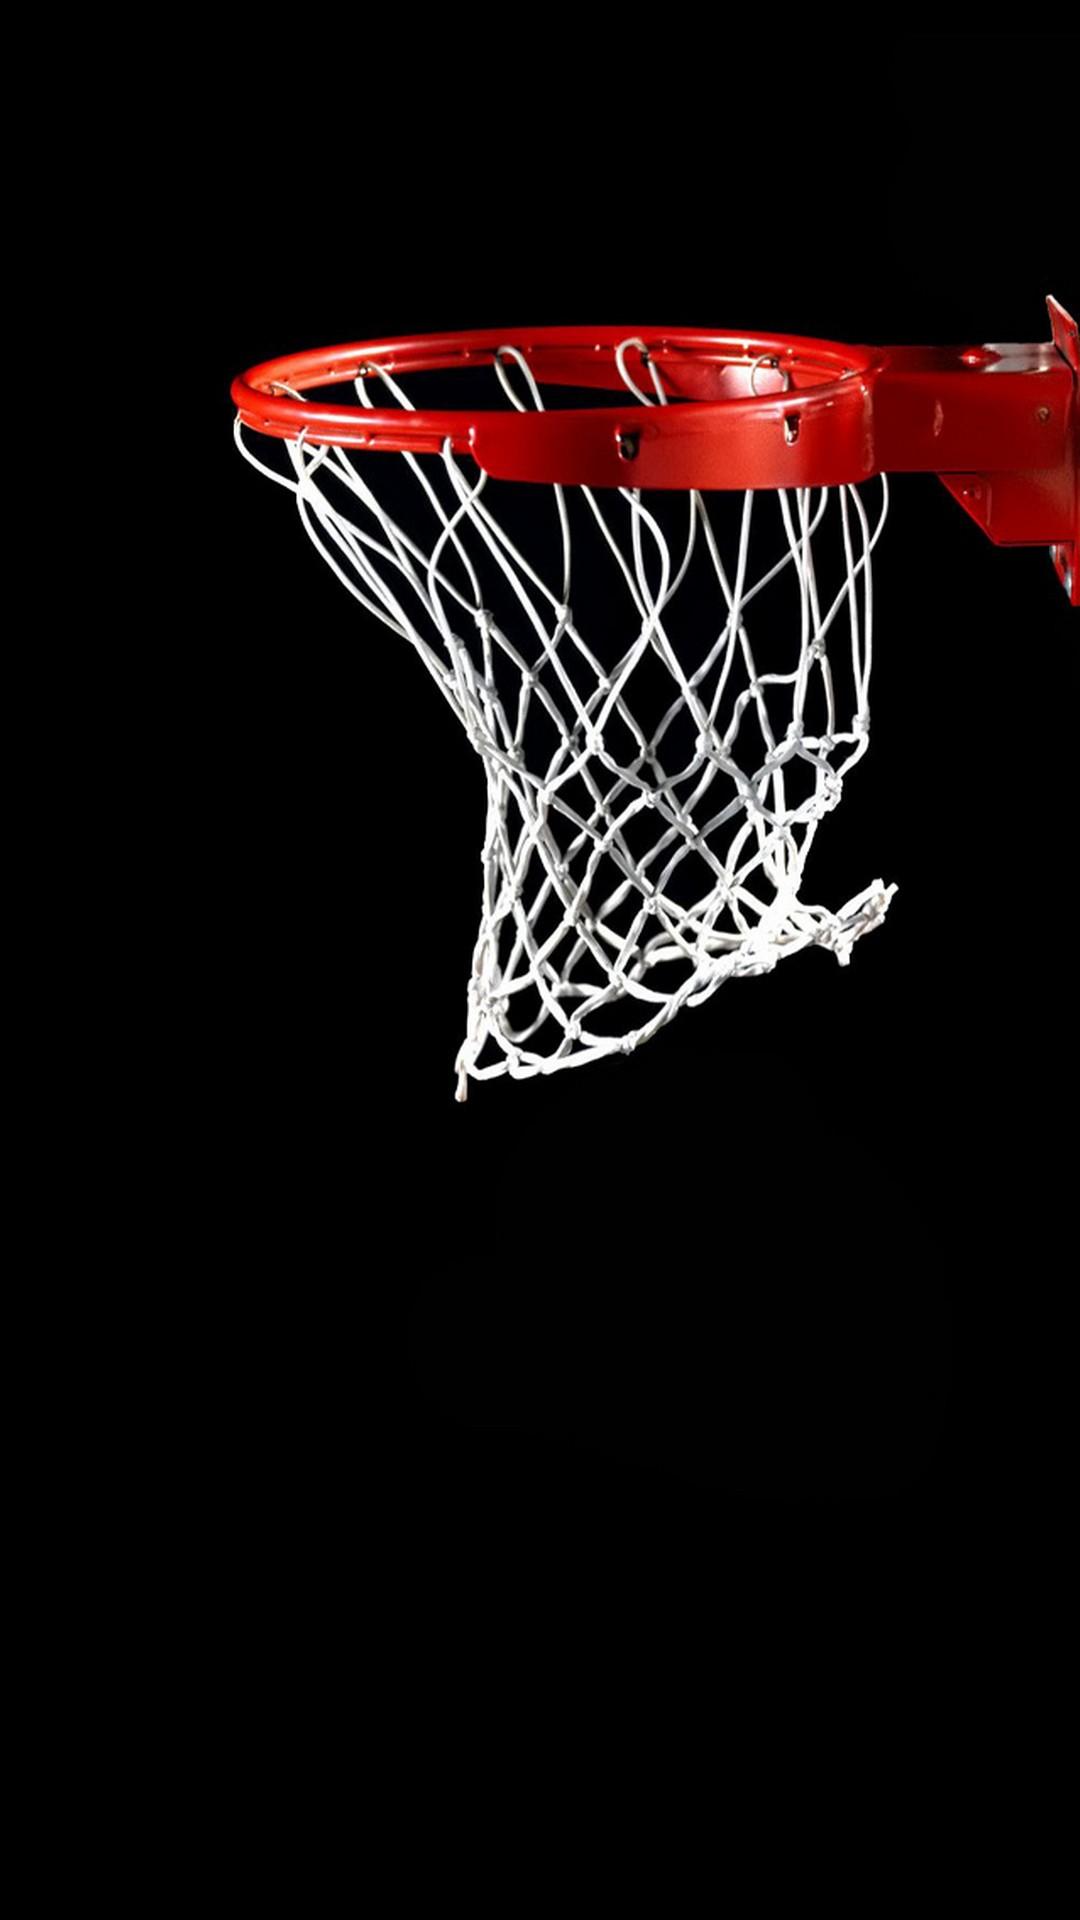 NBA HD Wallpaper For Mobile Basketball Wallpaper